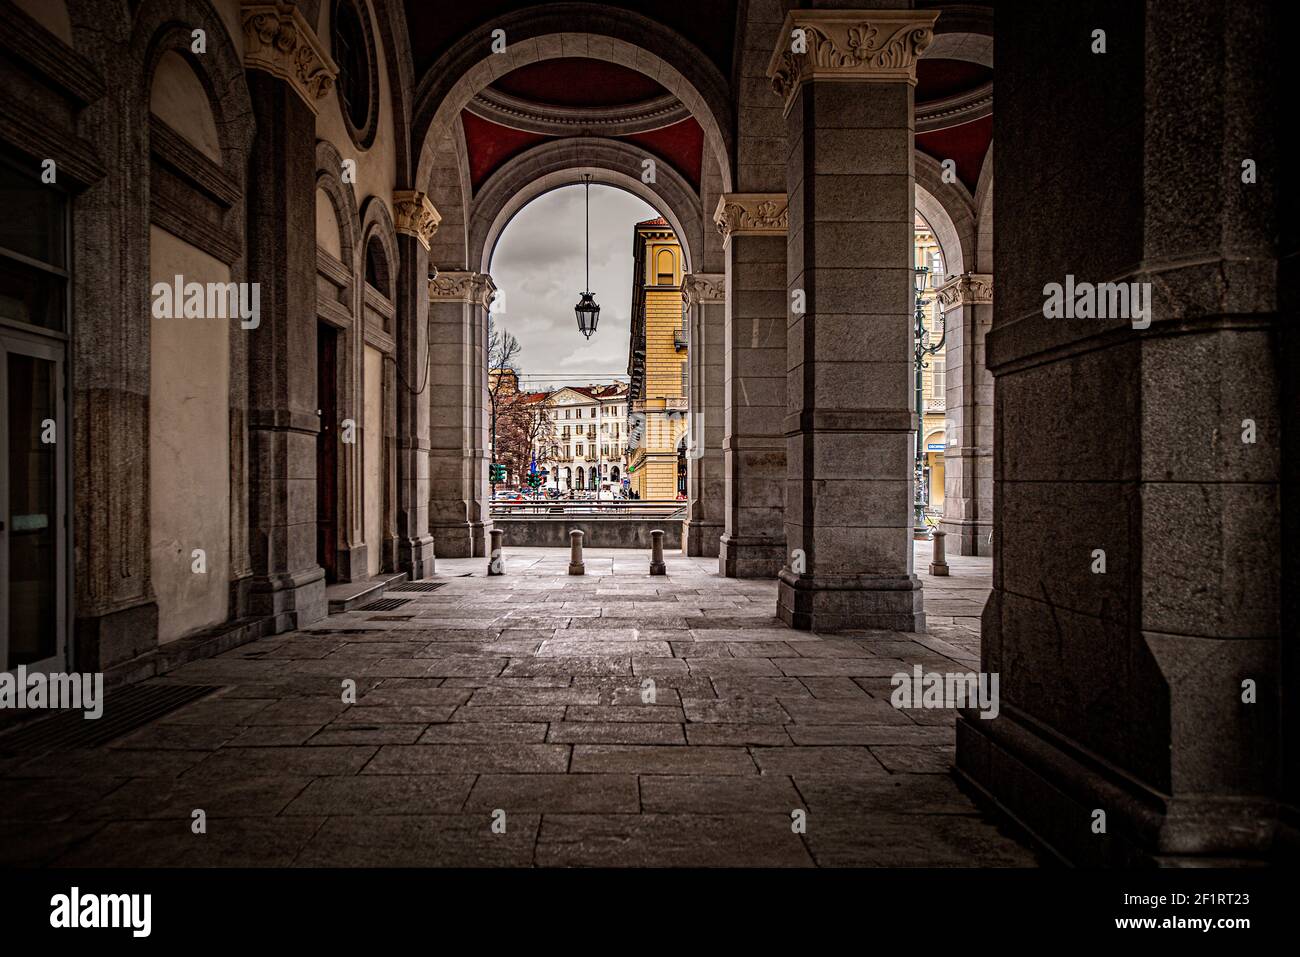 Italy Piedmont Turin - Porta Nuova Station - Arcade Stock Photo